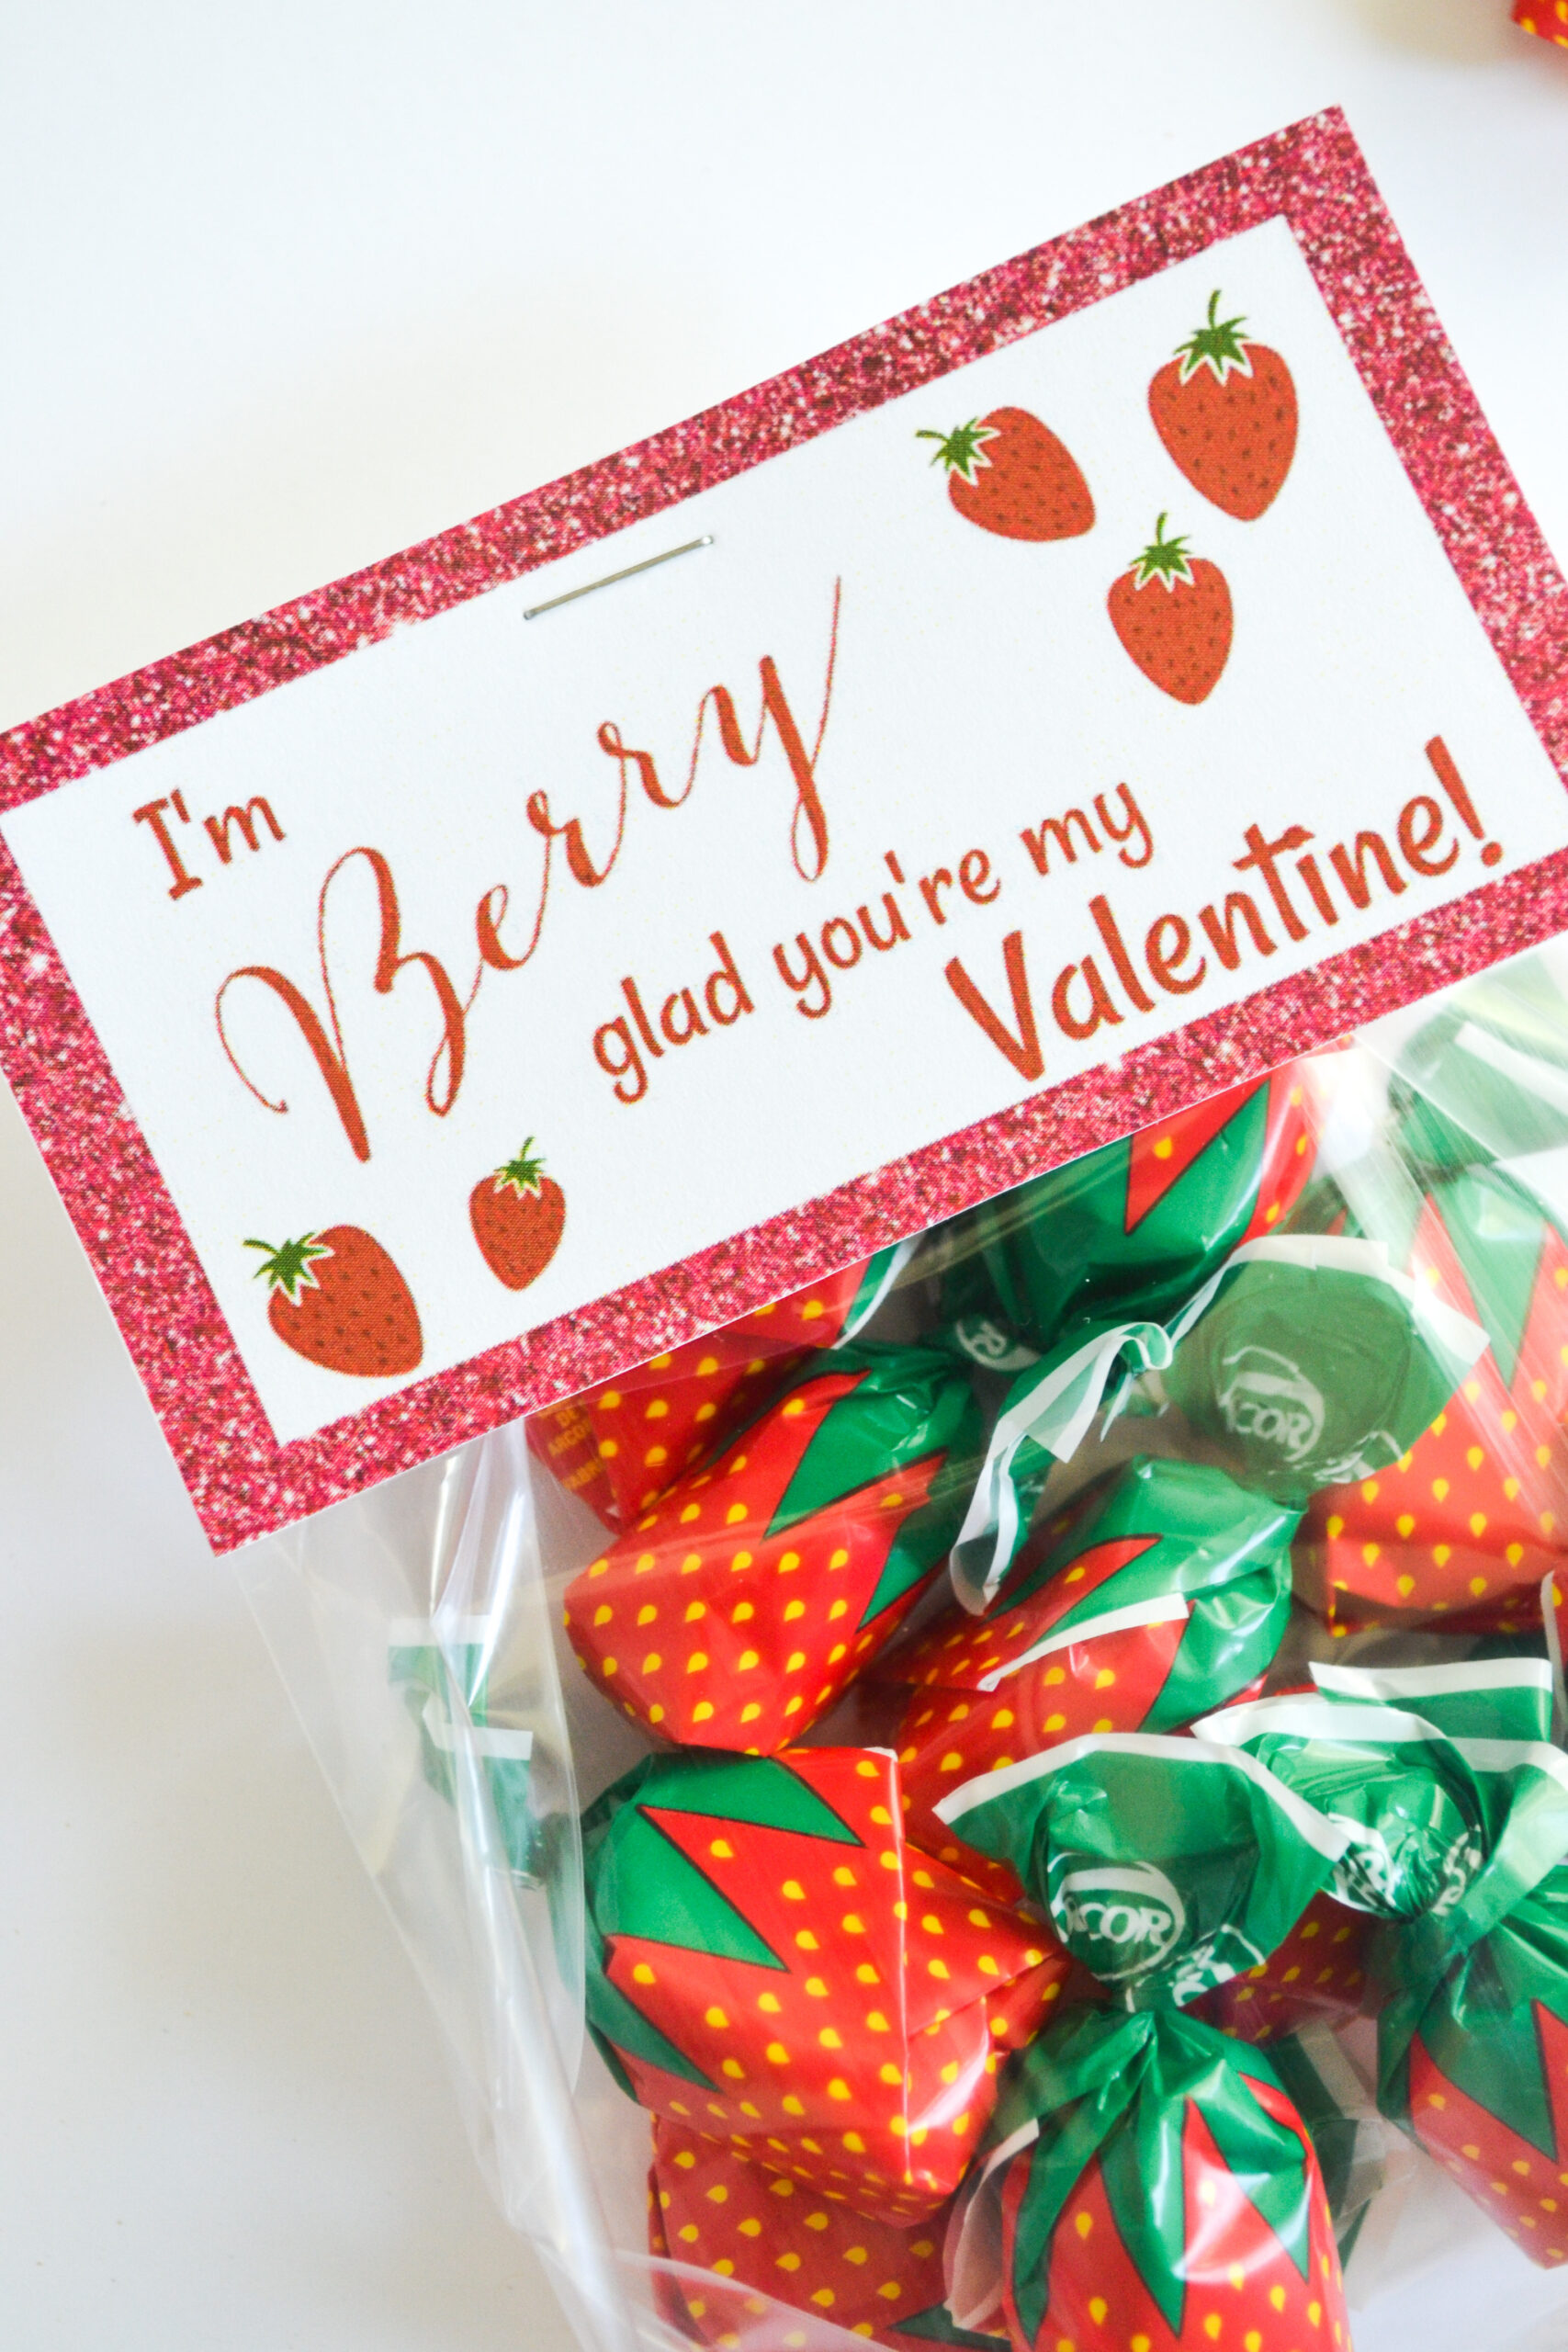 Free Printable: I'm Berry Glad You're My Valentine